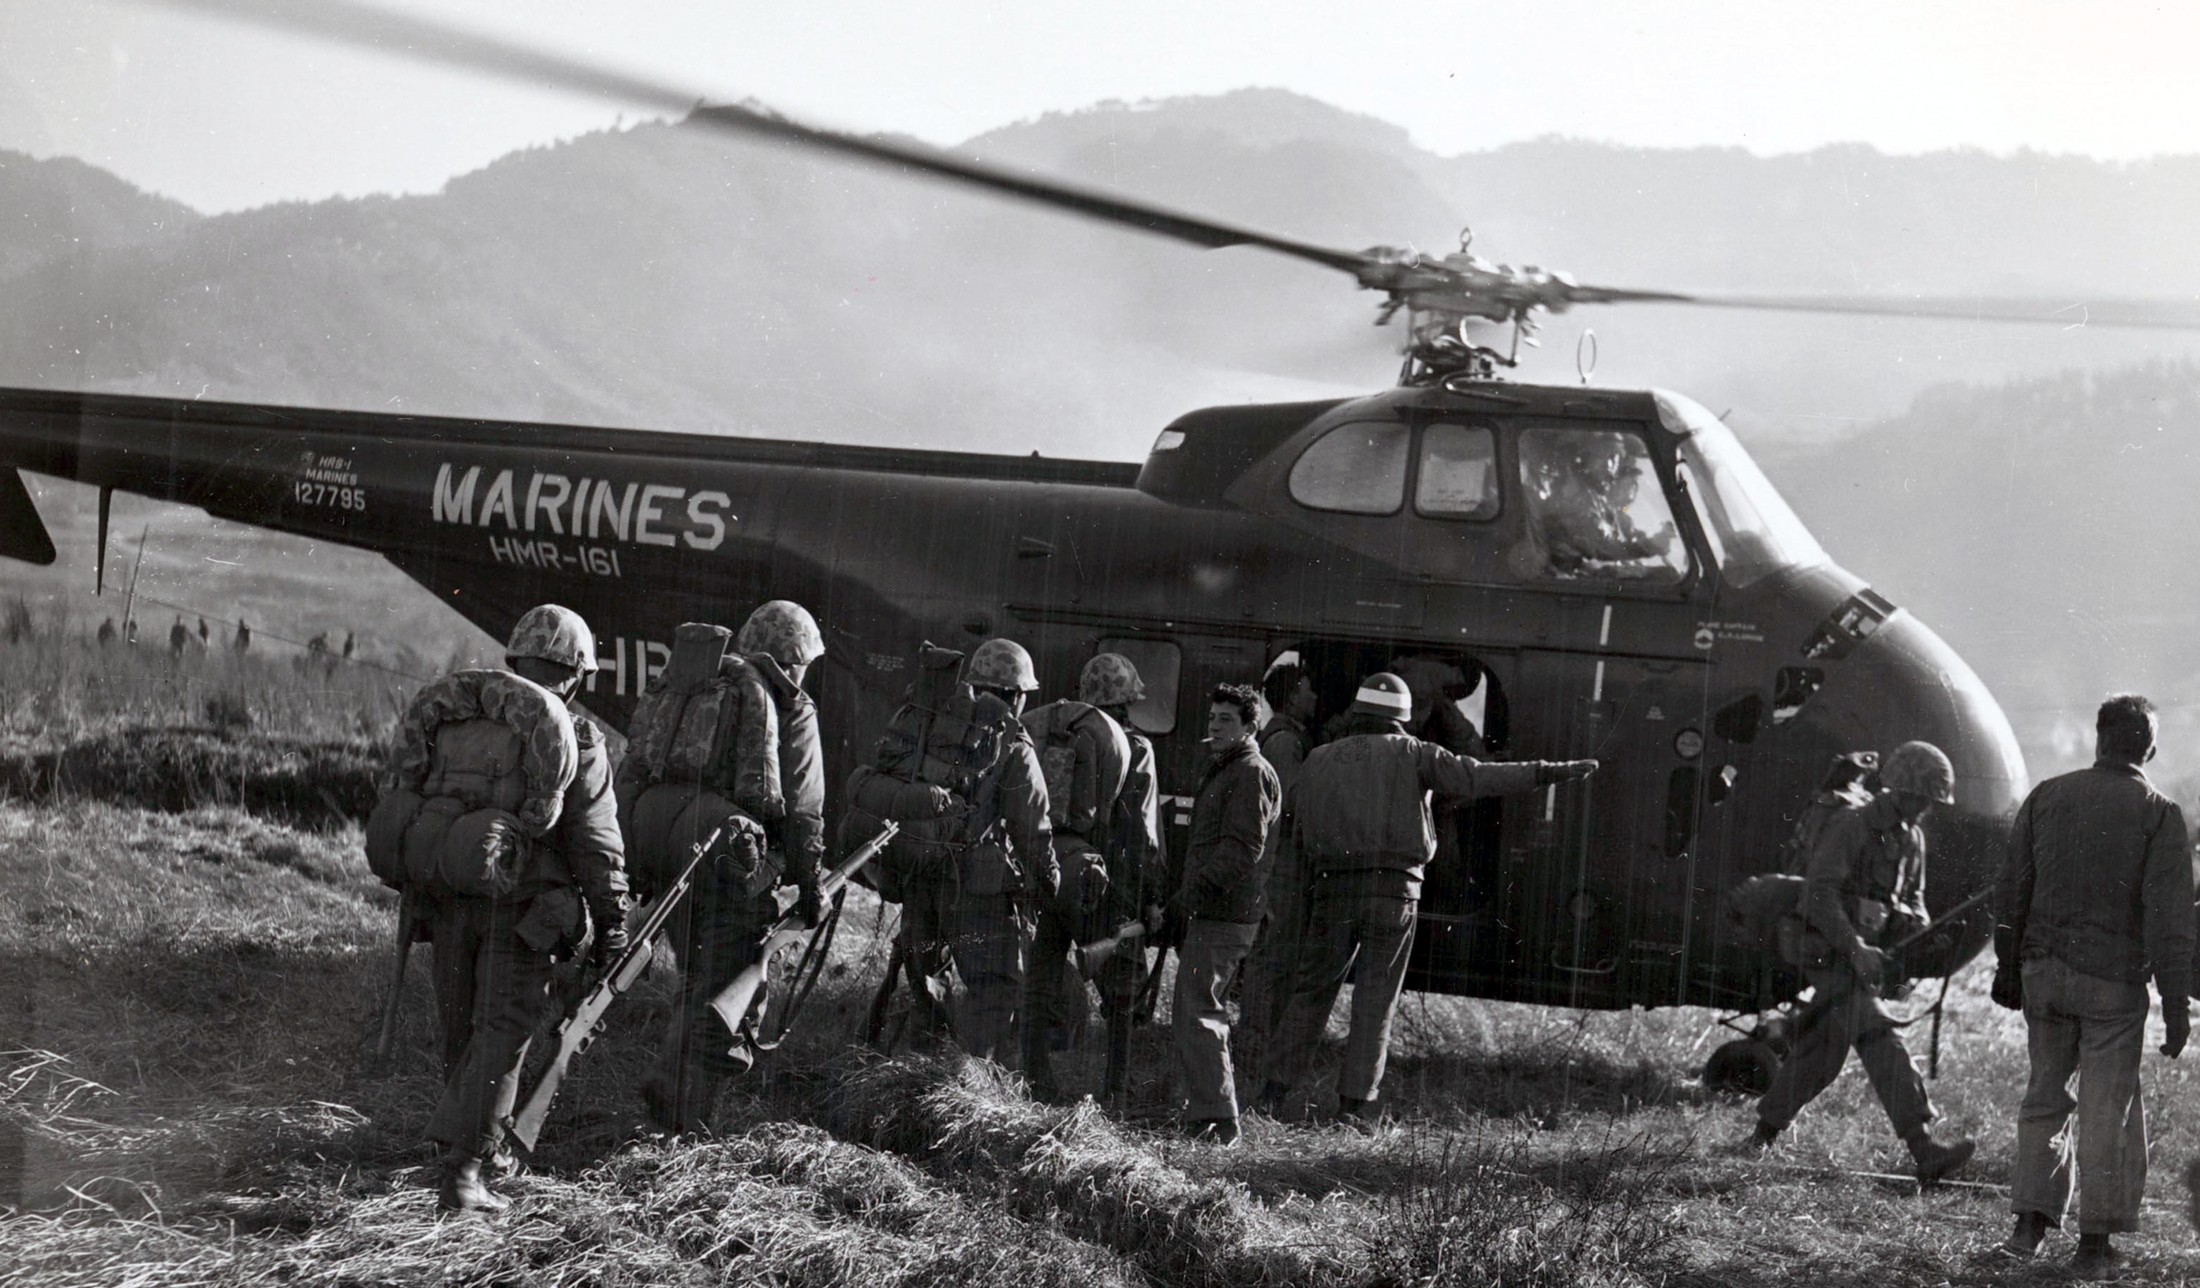 hmr-161 greyhawks marine helicopter transport squadron sikorsky hrs-1 usmc 13